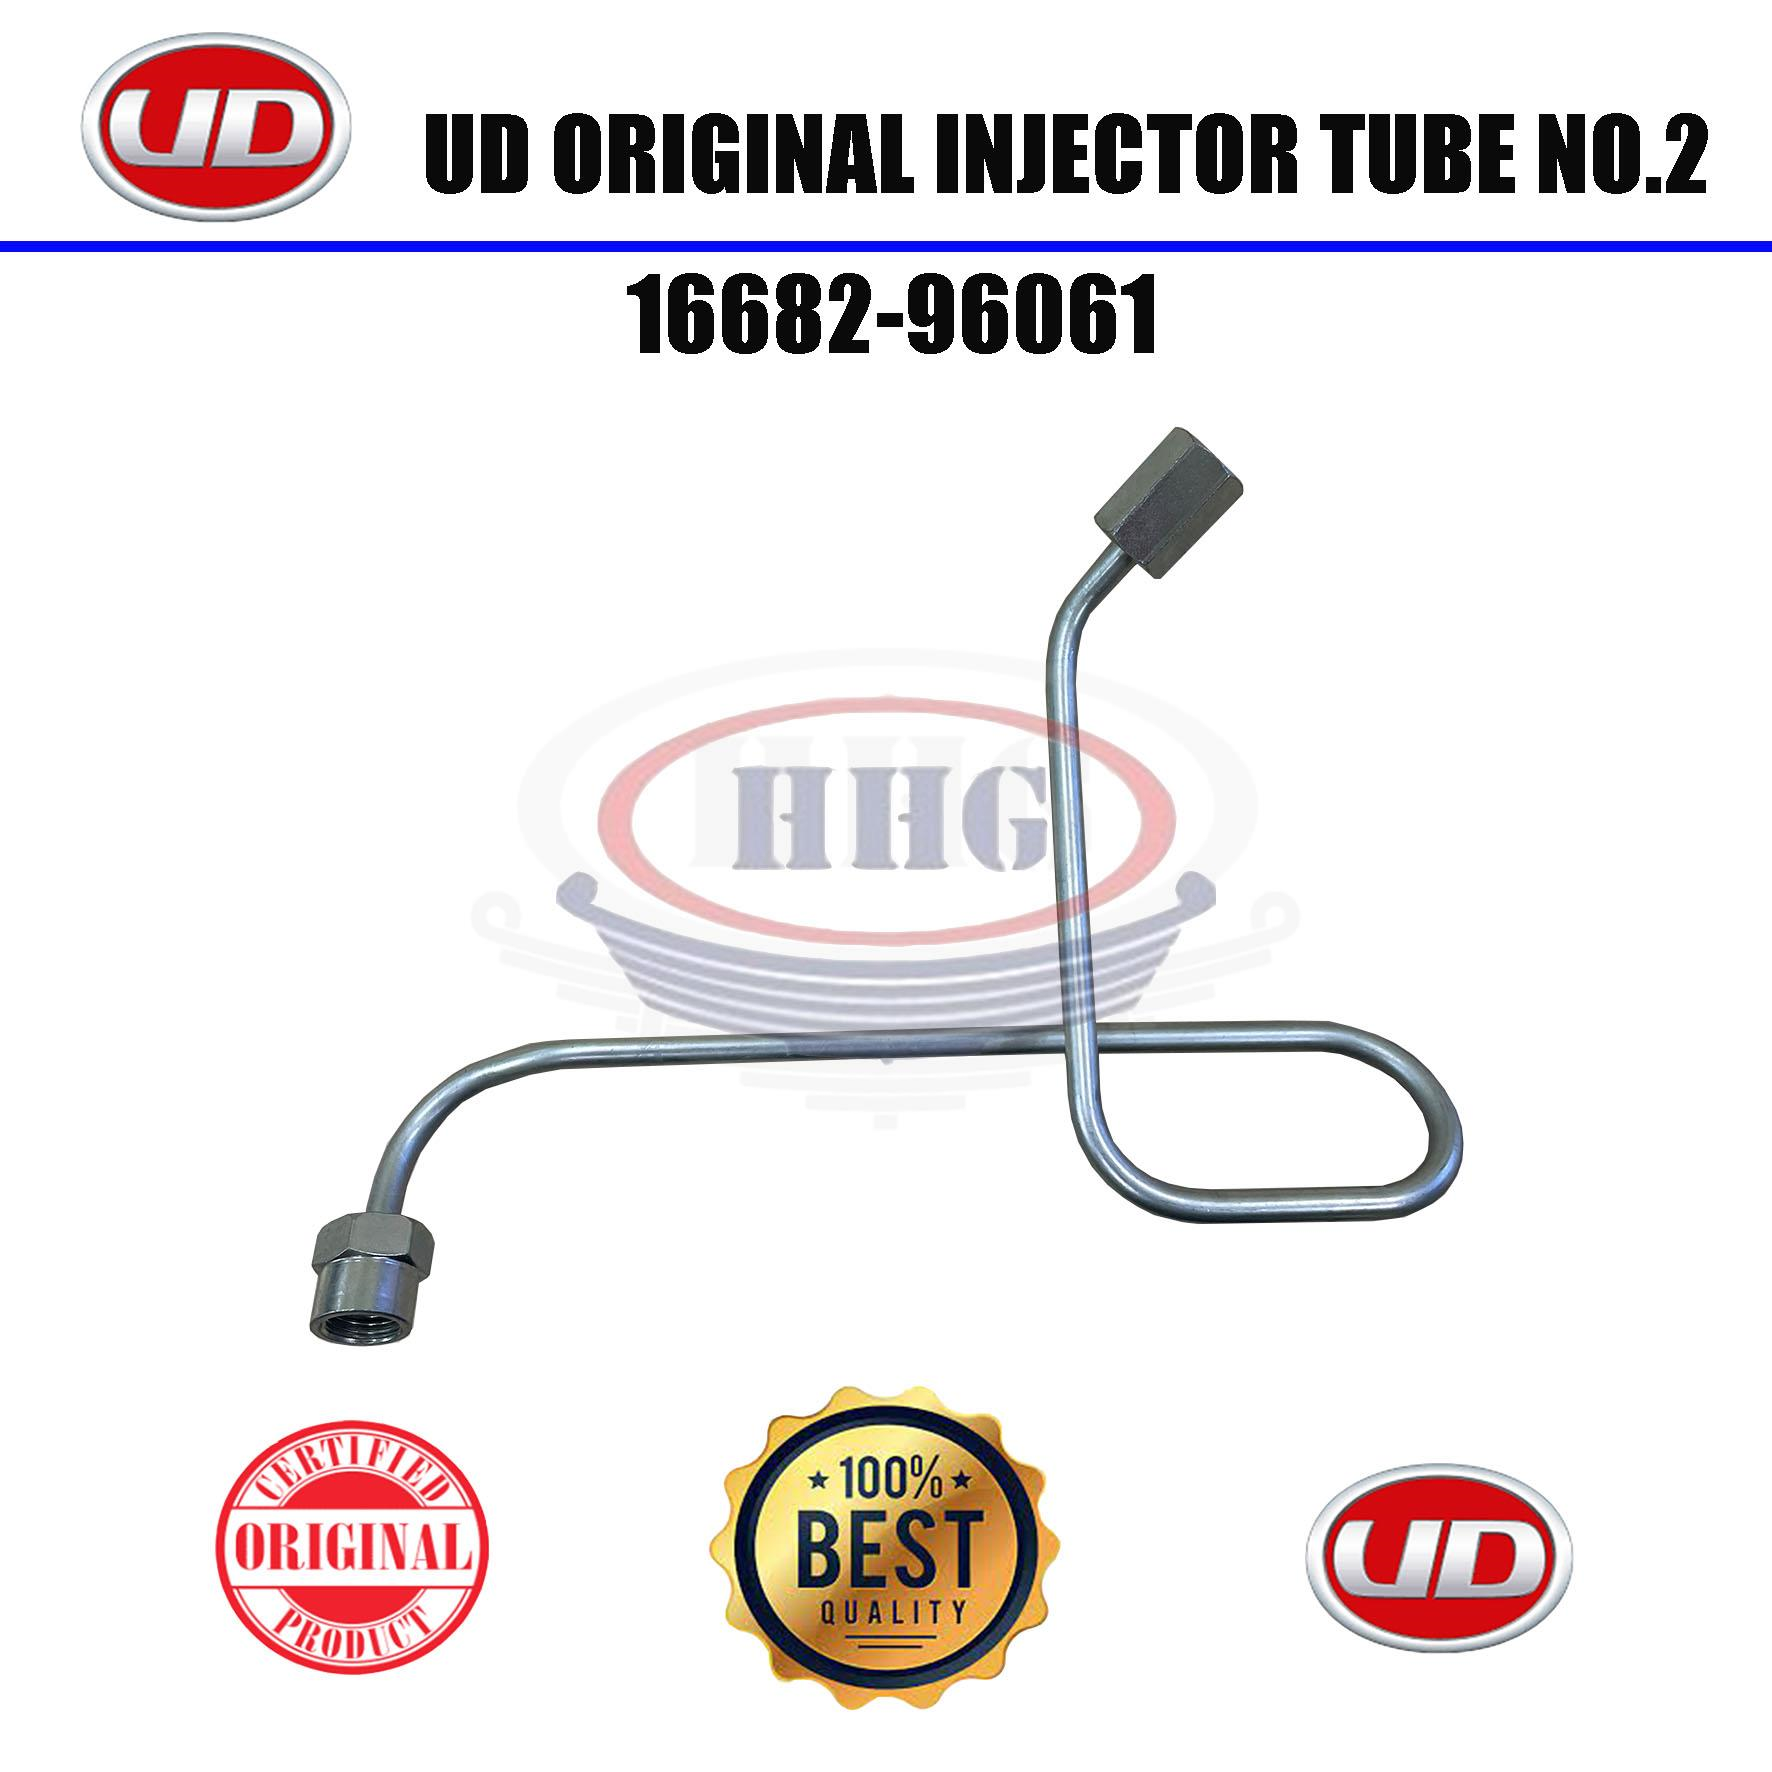 UD Original PE6T Injector Tube No.2 (16682-96061)